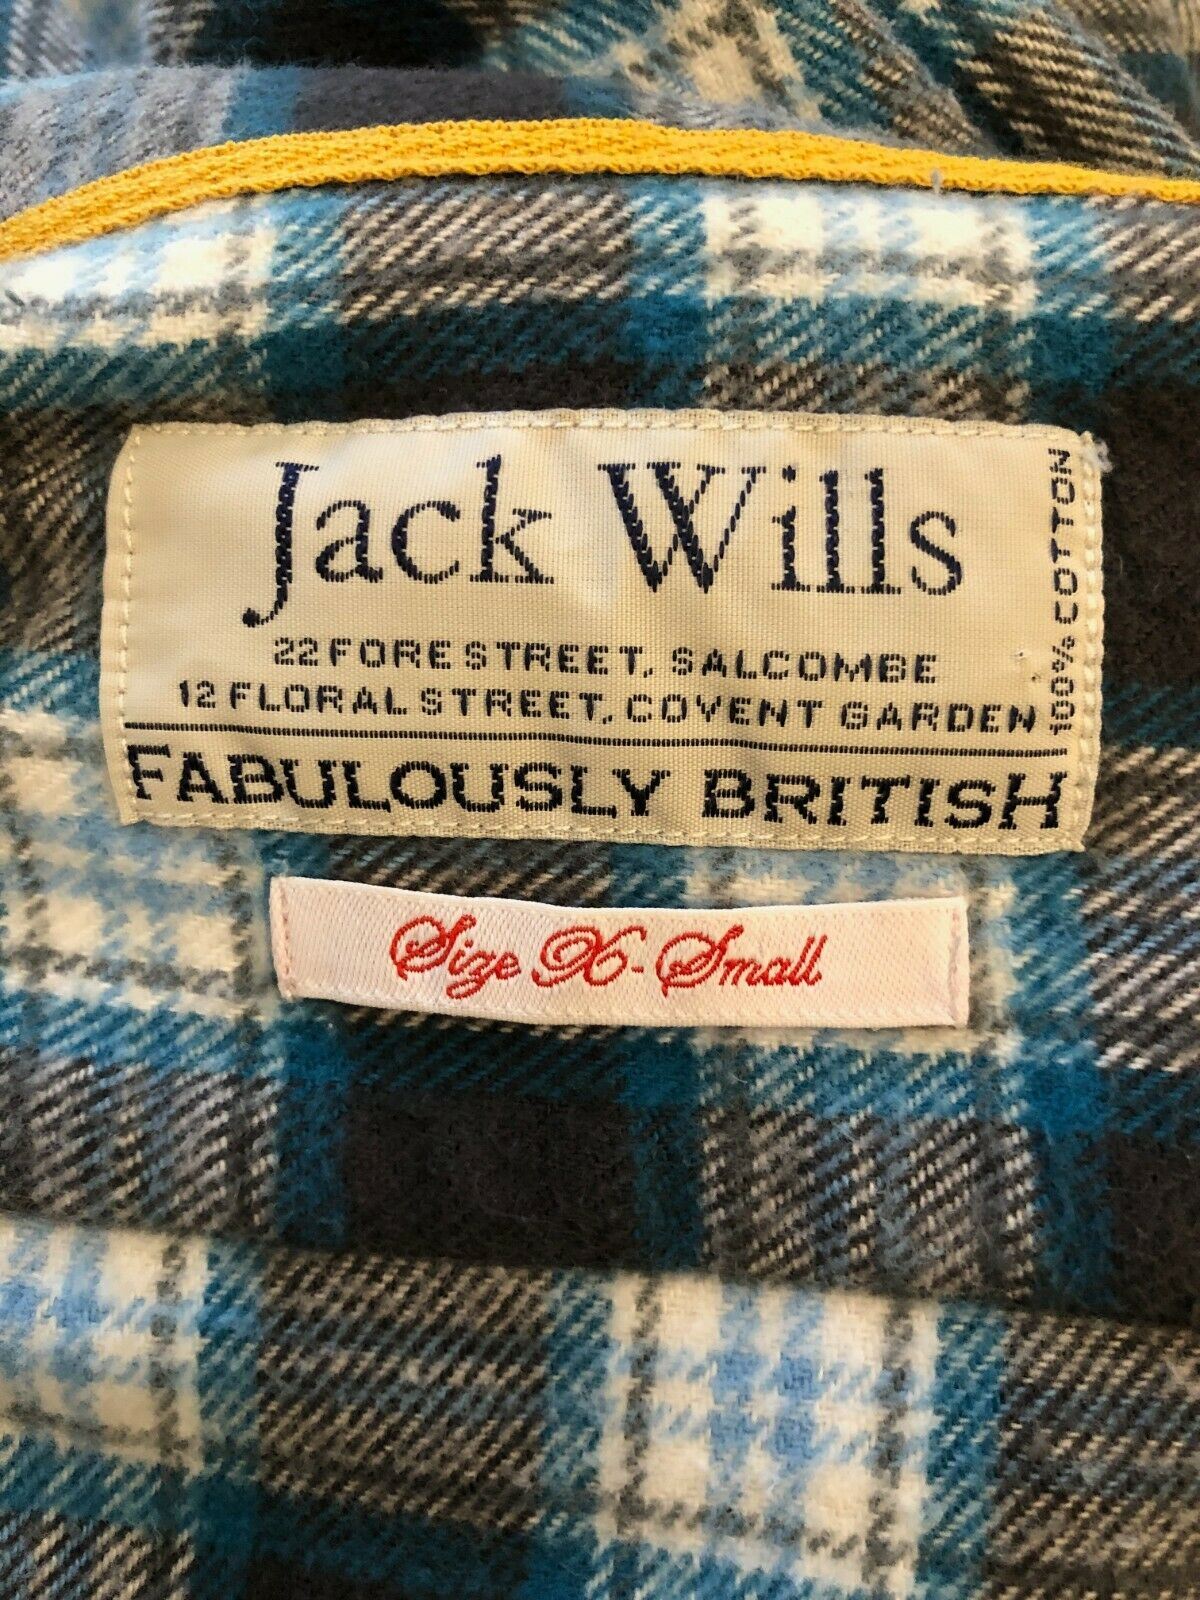 Jack Wills Men's Blue, White, Grey Brushed Cotton Long Sleeve Shirt Size XS Timeless Fashions